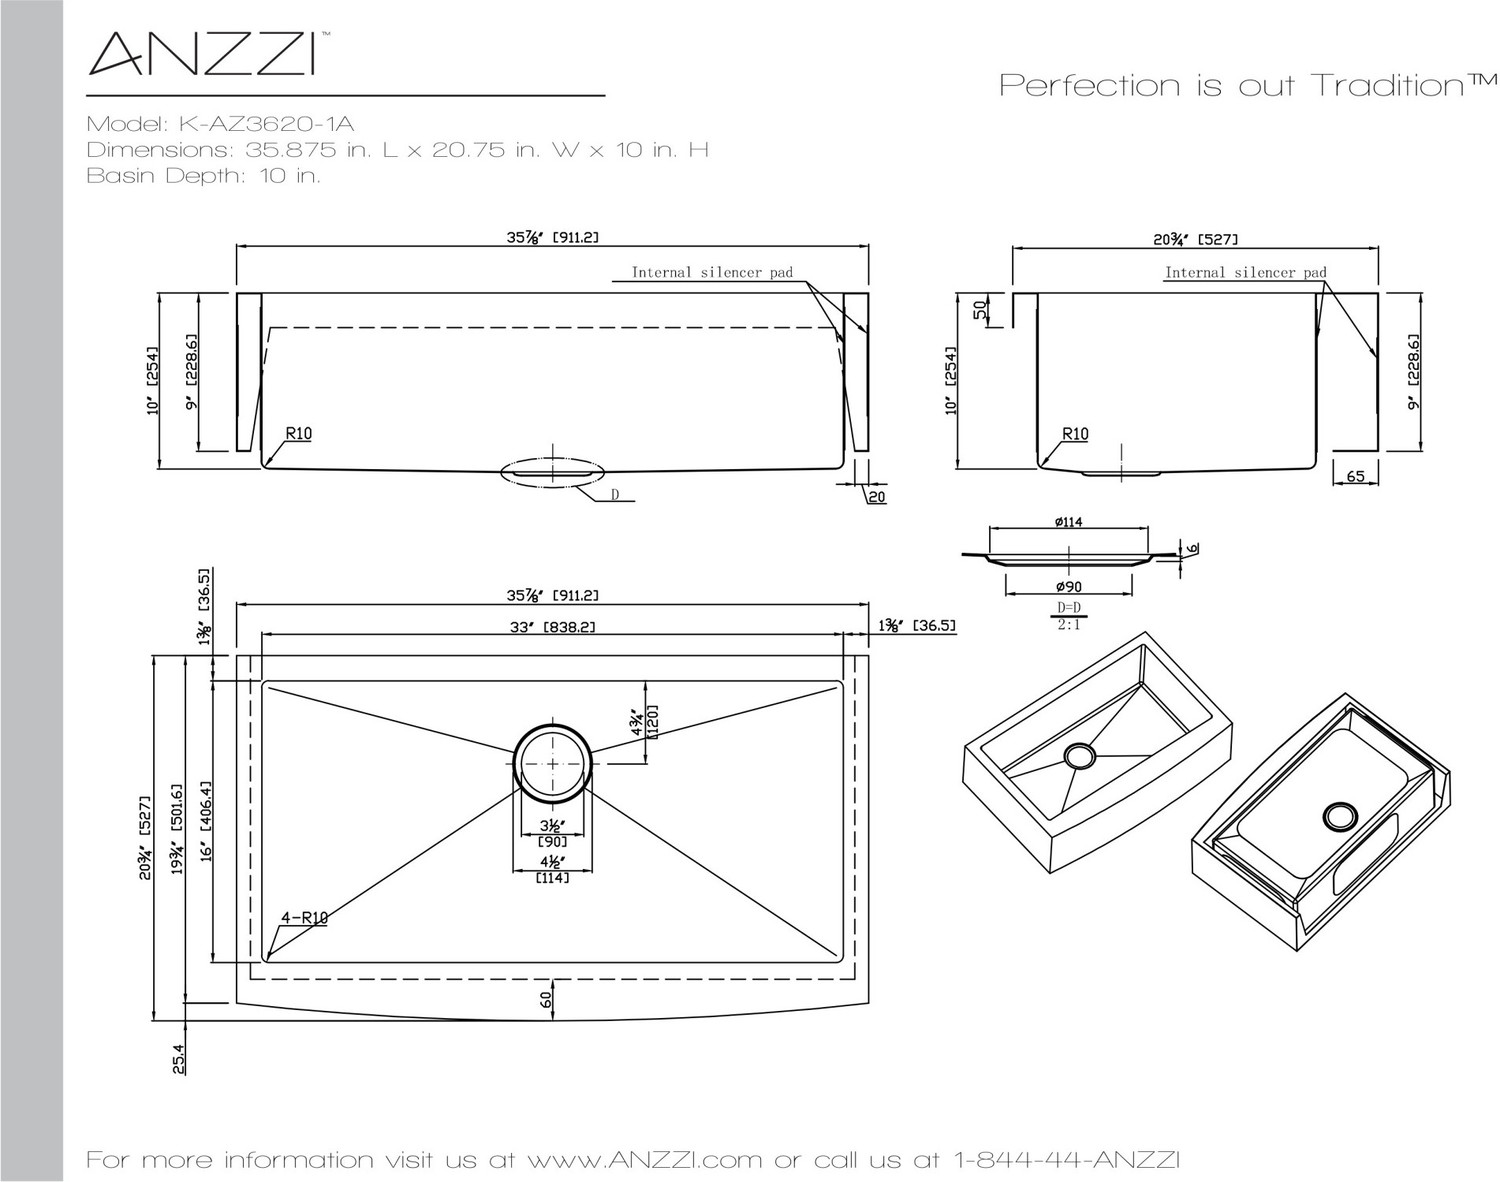  Anzzi KITCHEN - Kitchen Sinks - Farmhouse - Stainless Steel Single Bowl Sinks Steel